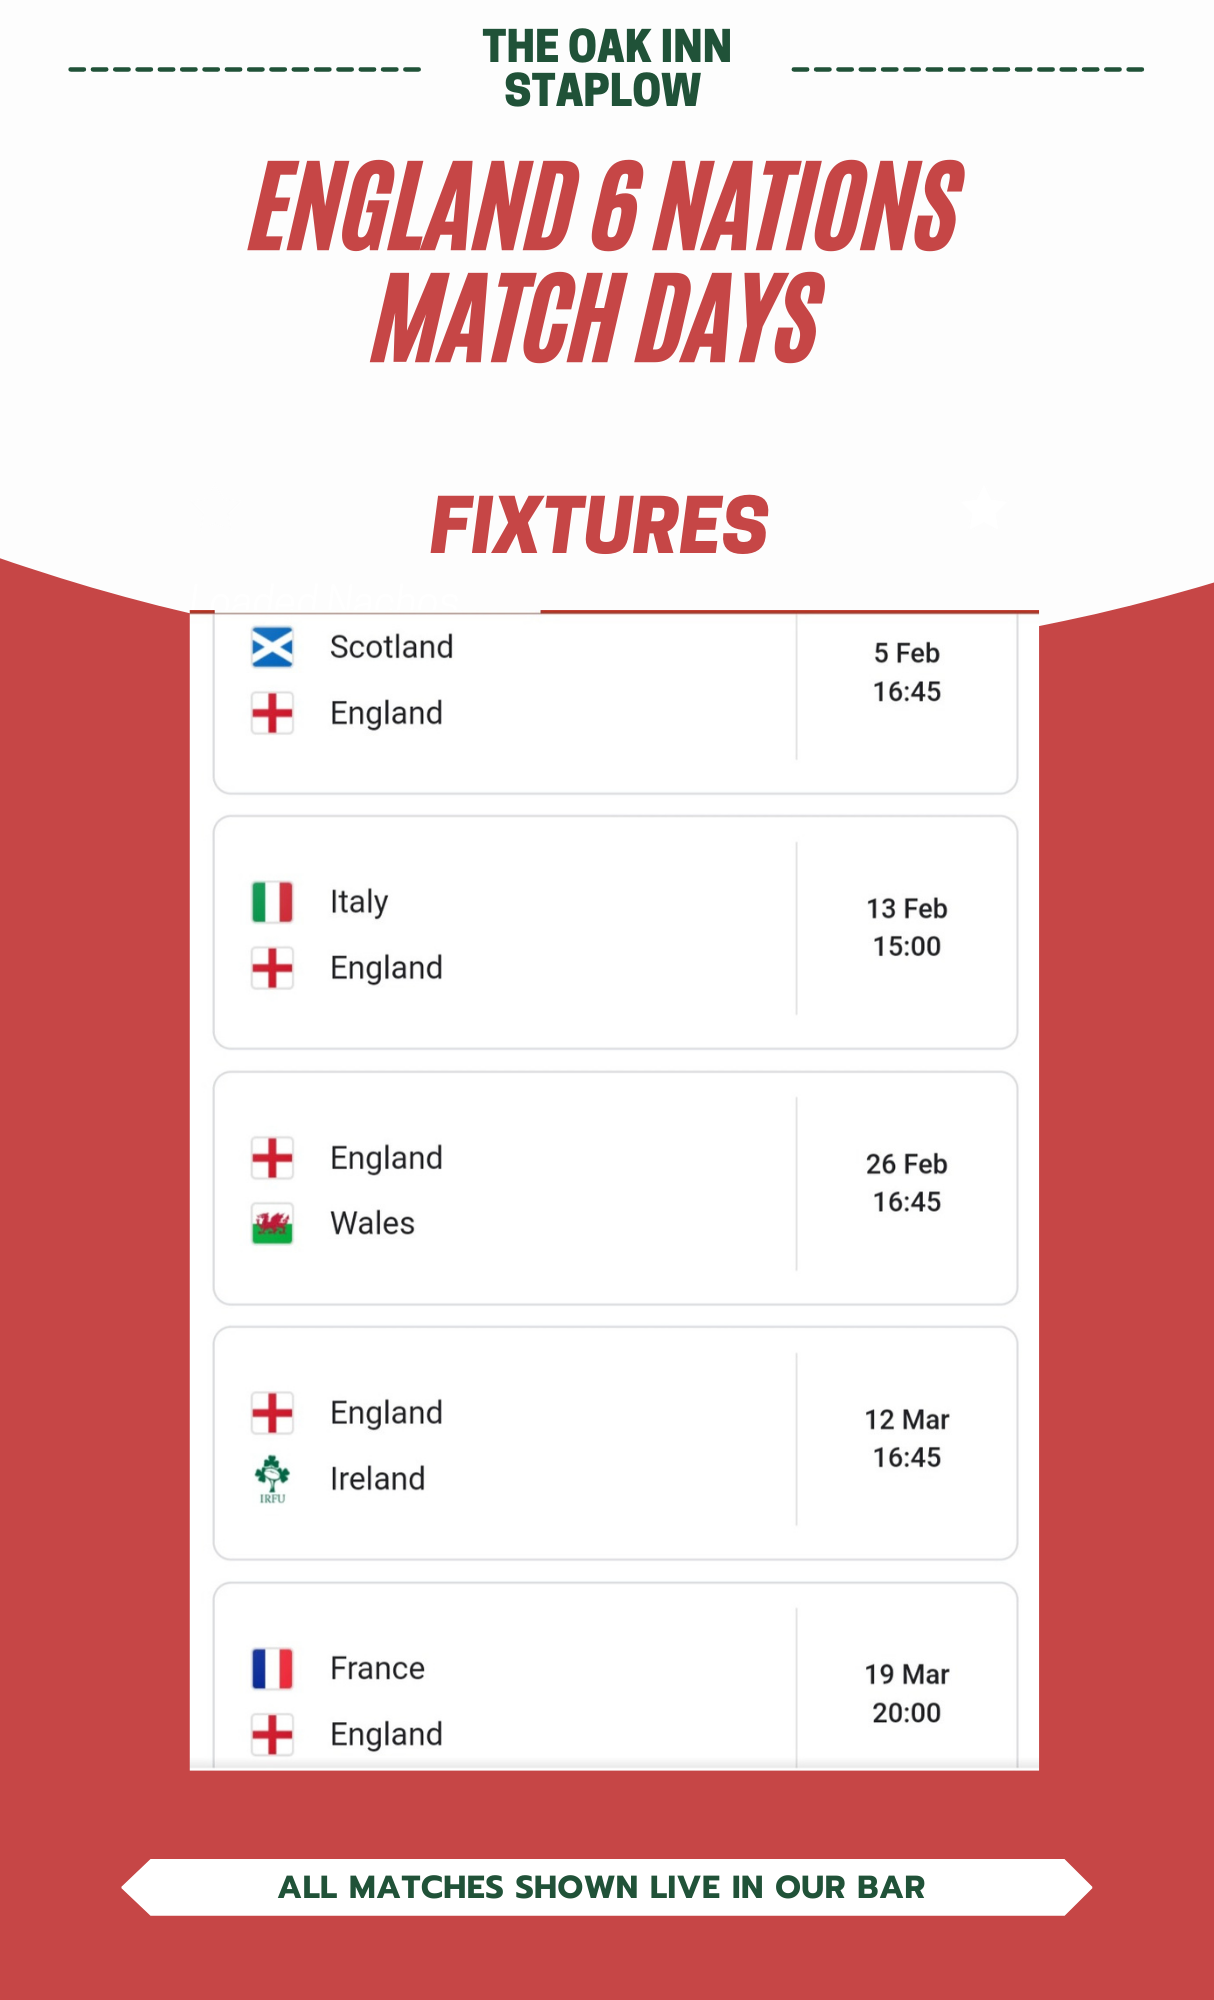 Six nations Fixture list with times - event ledbury - the oak inn staplow